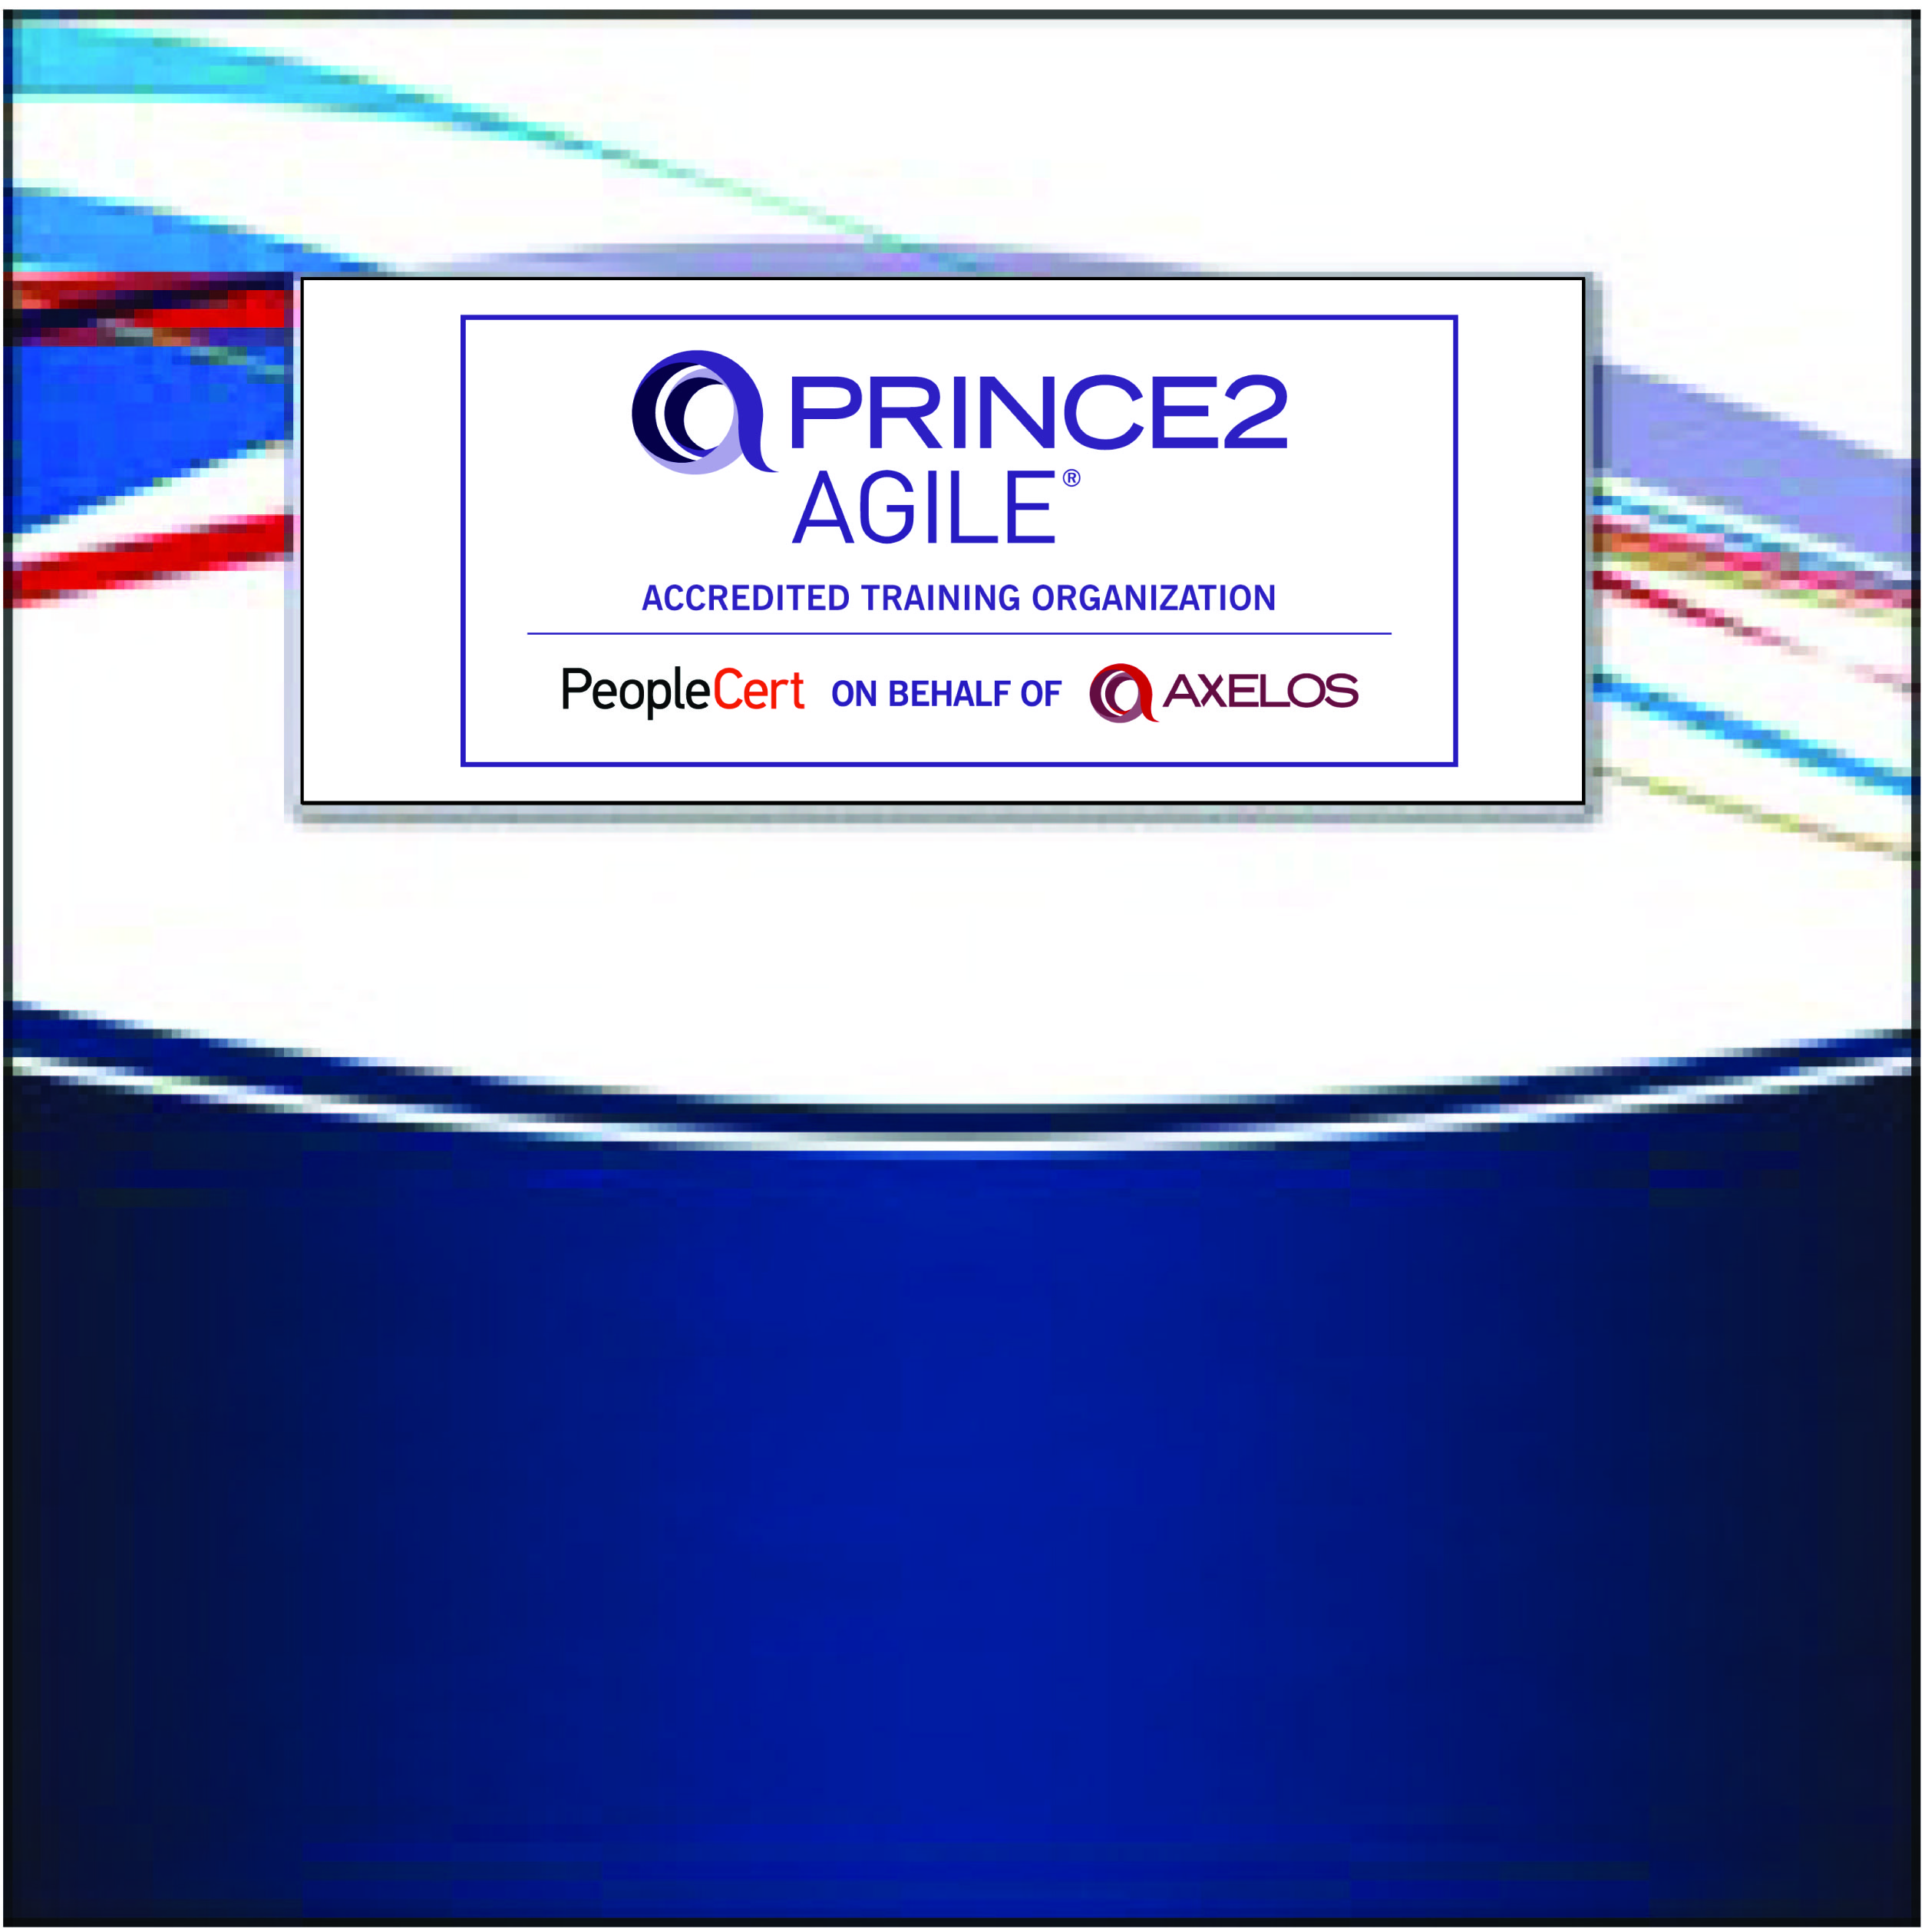 PRINCE2-Agile-Foundation Lernhilfe